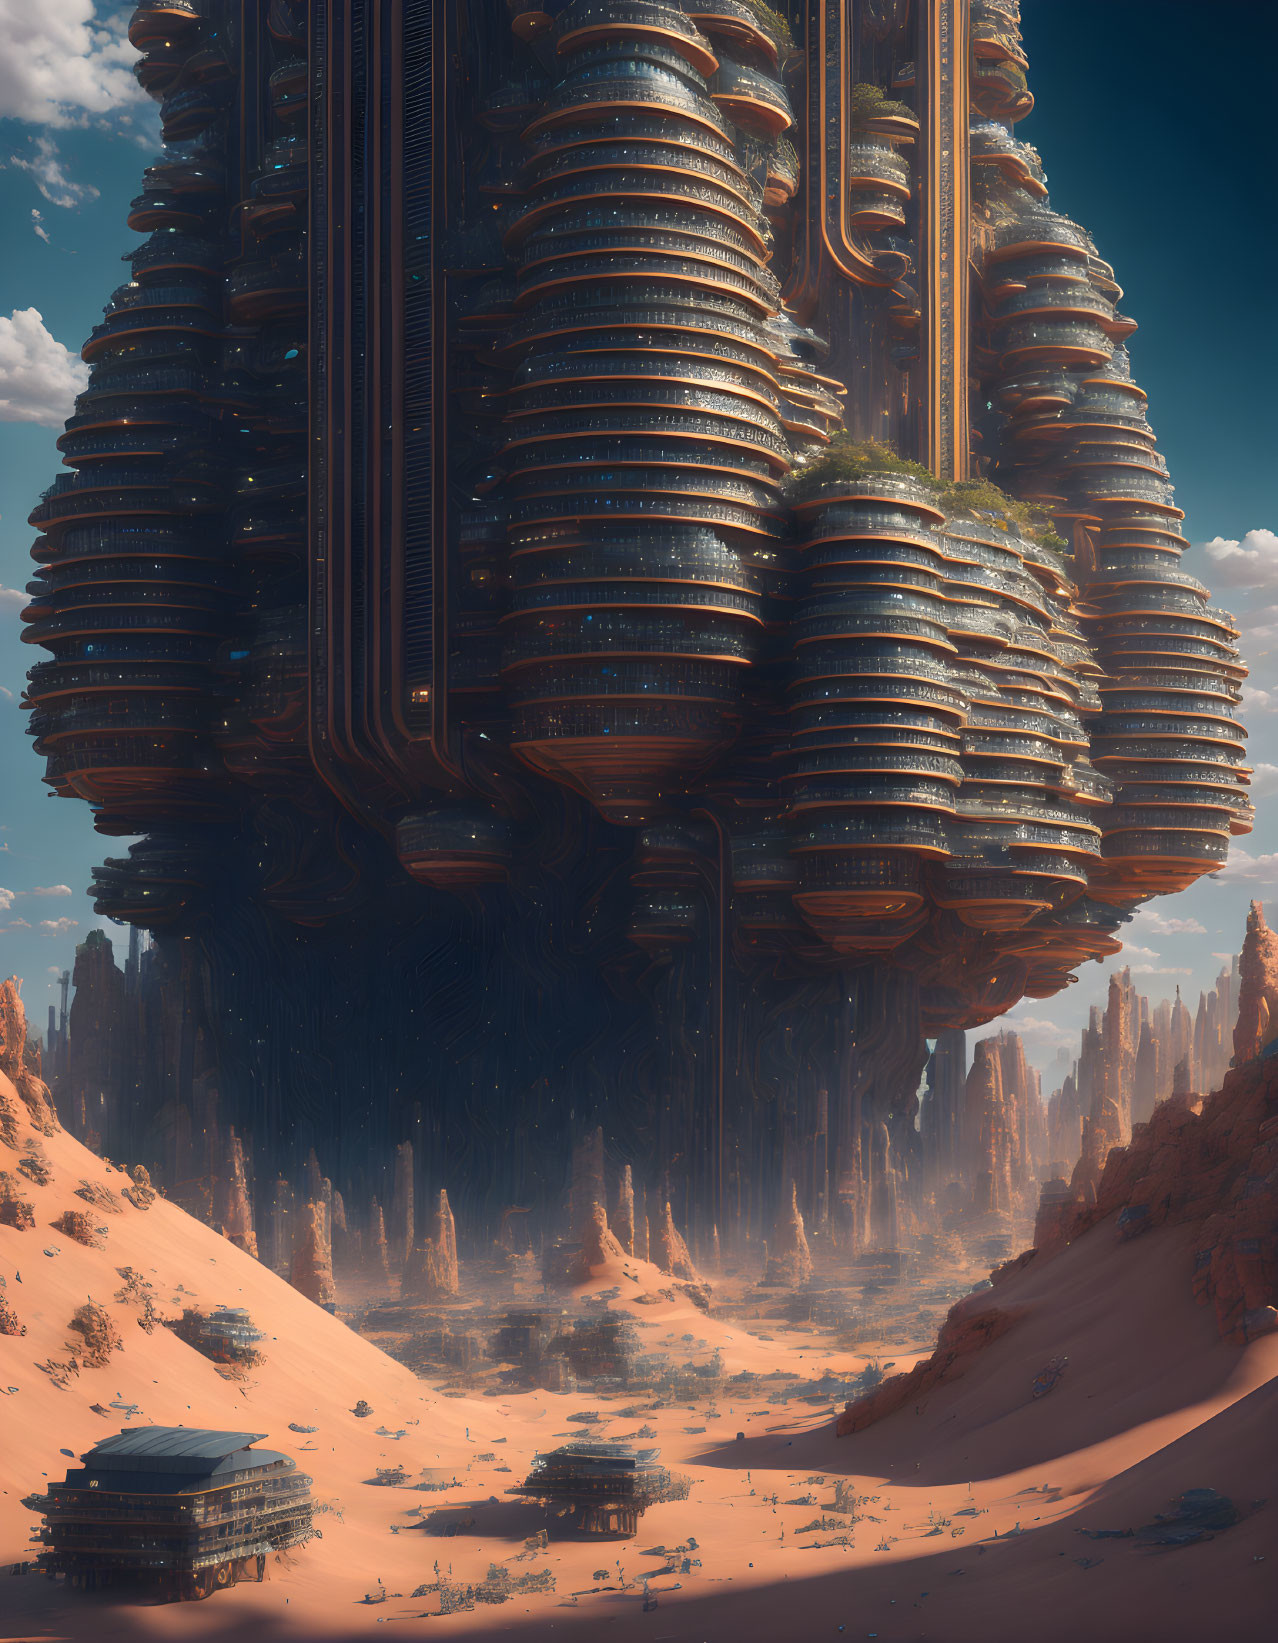 The alien megacity